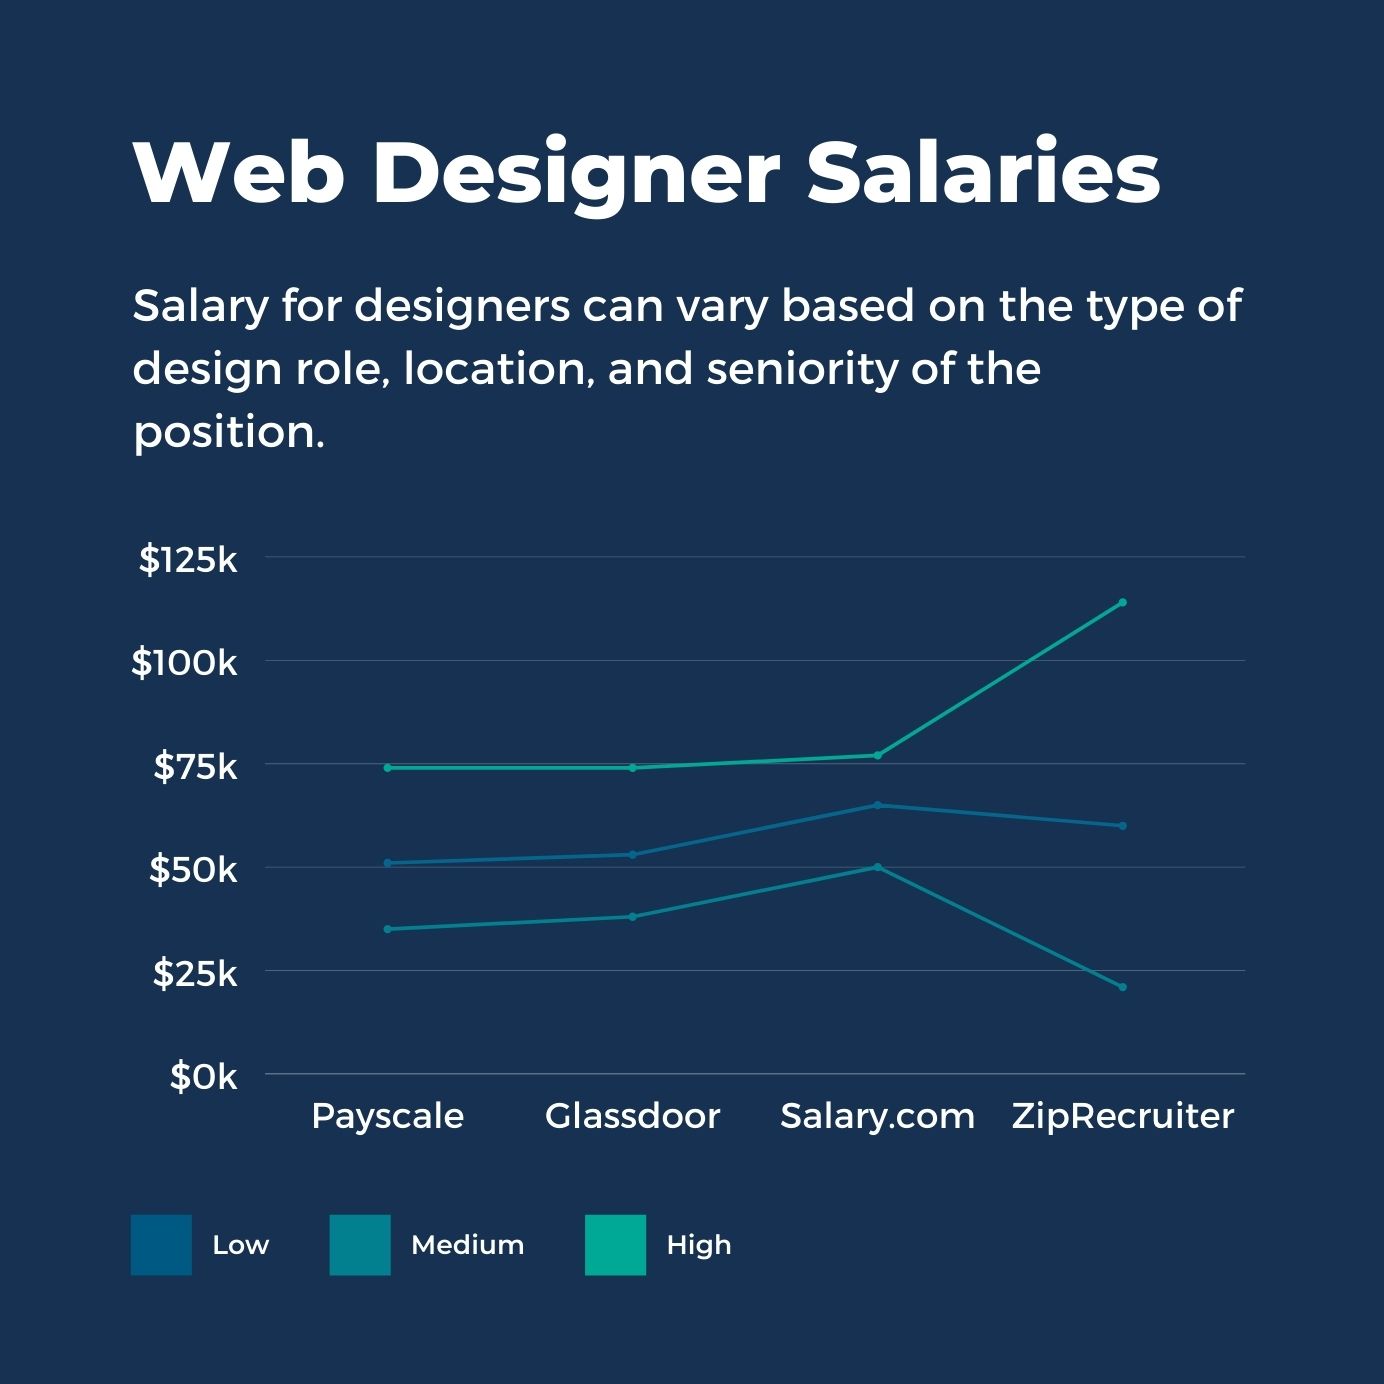 Web Designer Salaries